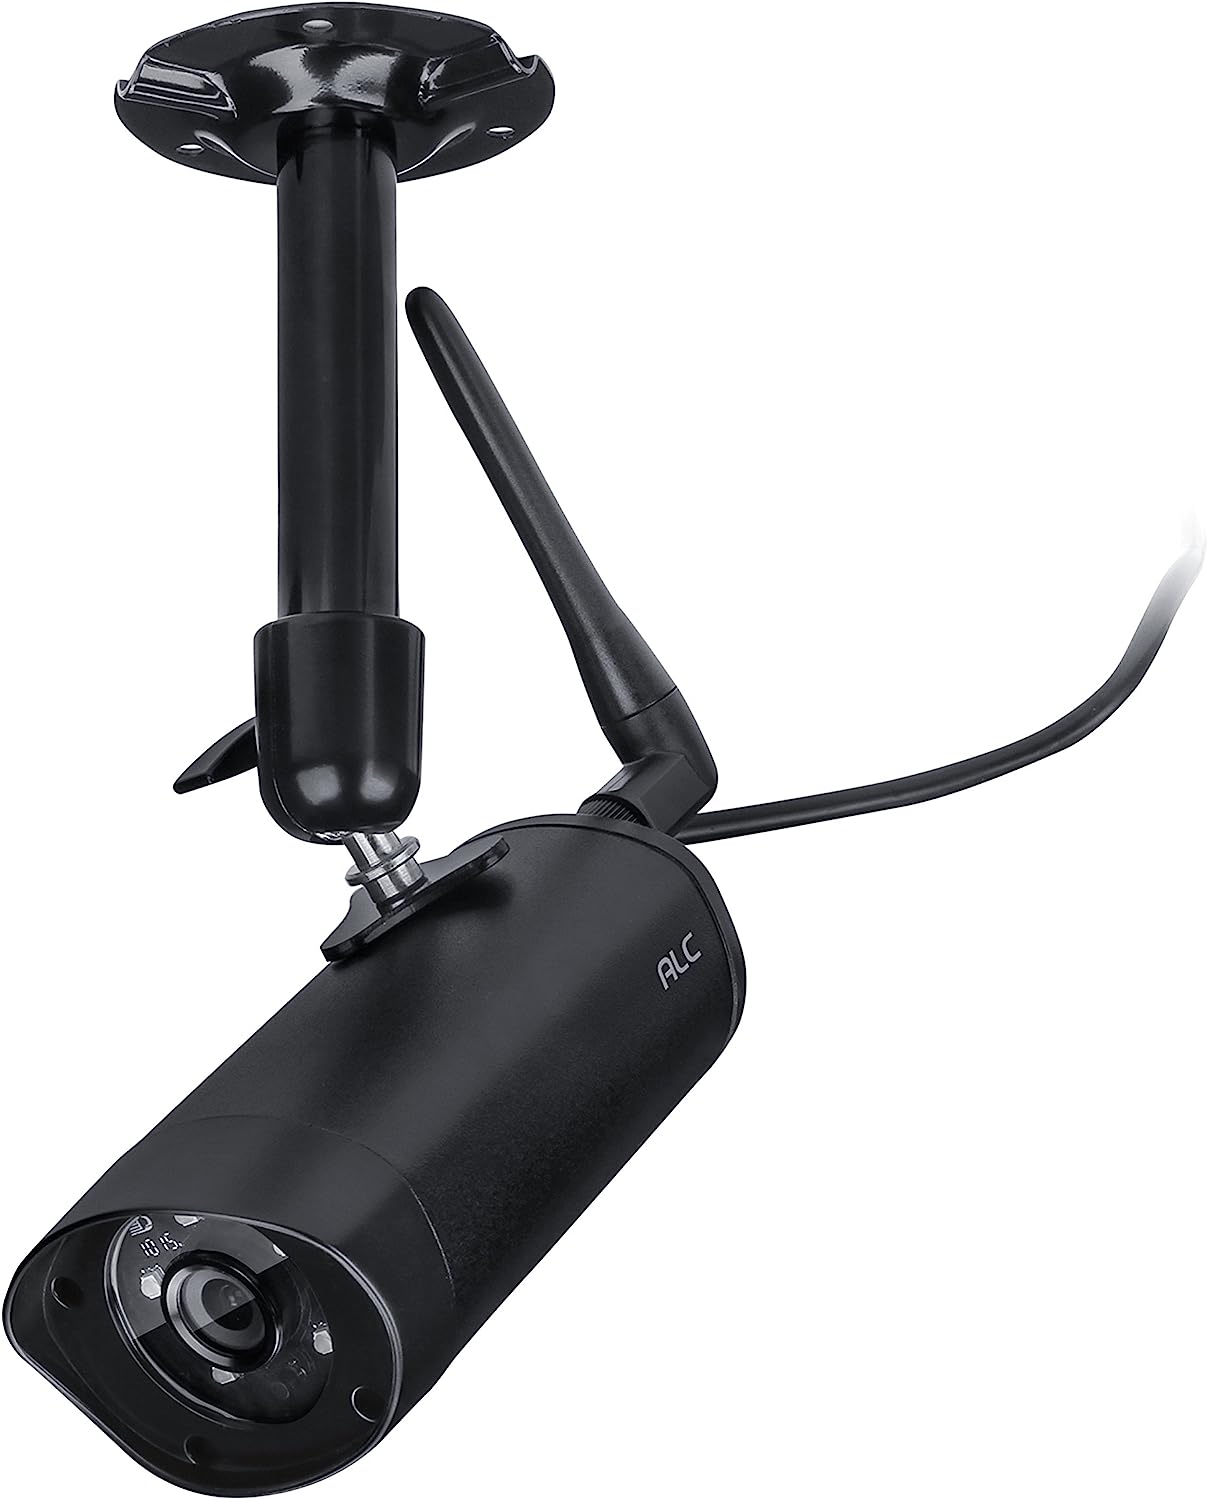 outdoor-surveillance-camera-awsc35-new-black-3